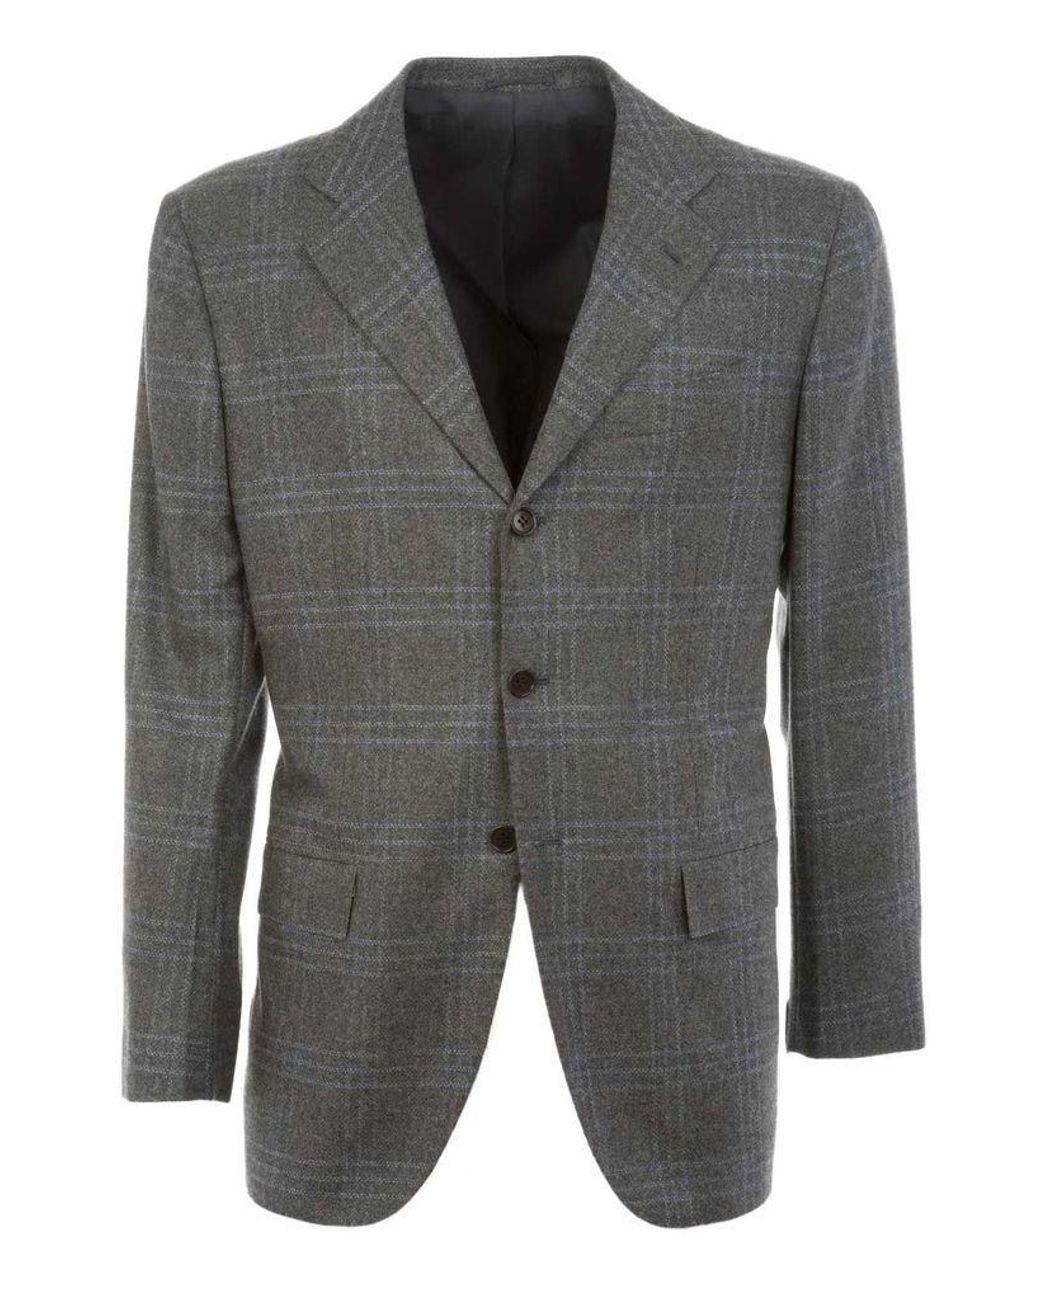 Kiton Cashmere Blazer in Grey (Grey) for Men - Lyst